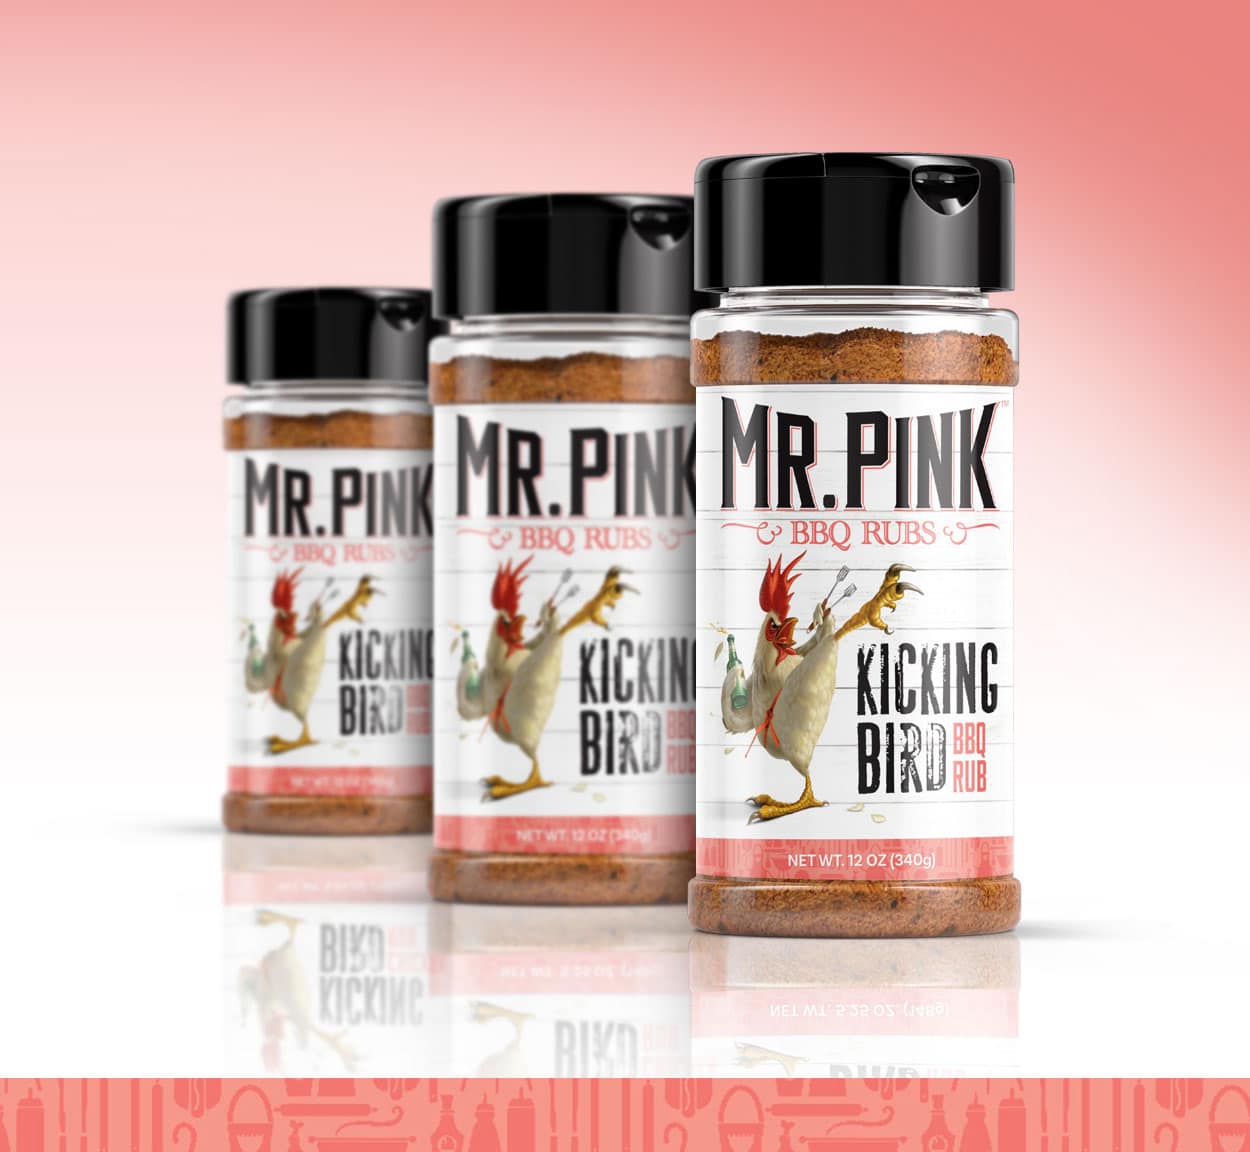 Mr. Pink Kicking Bird BBQ Rub Packaging Design